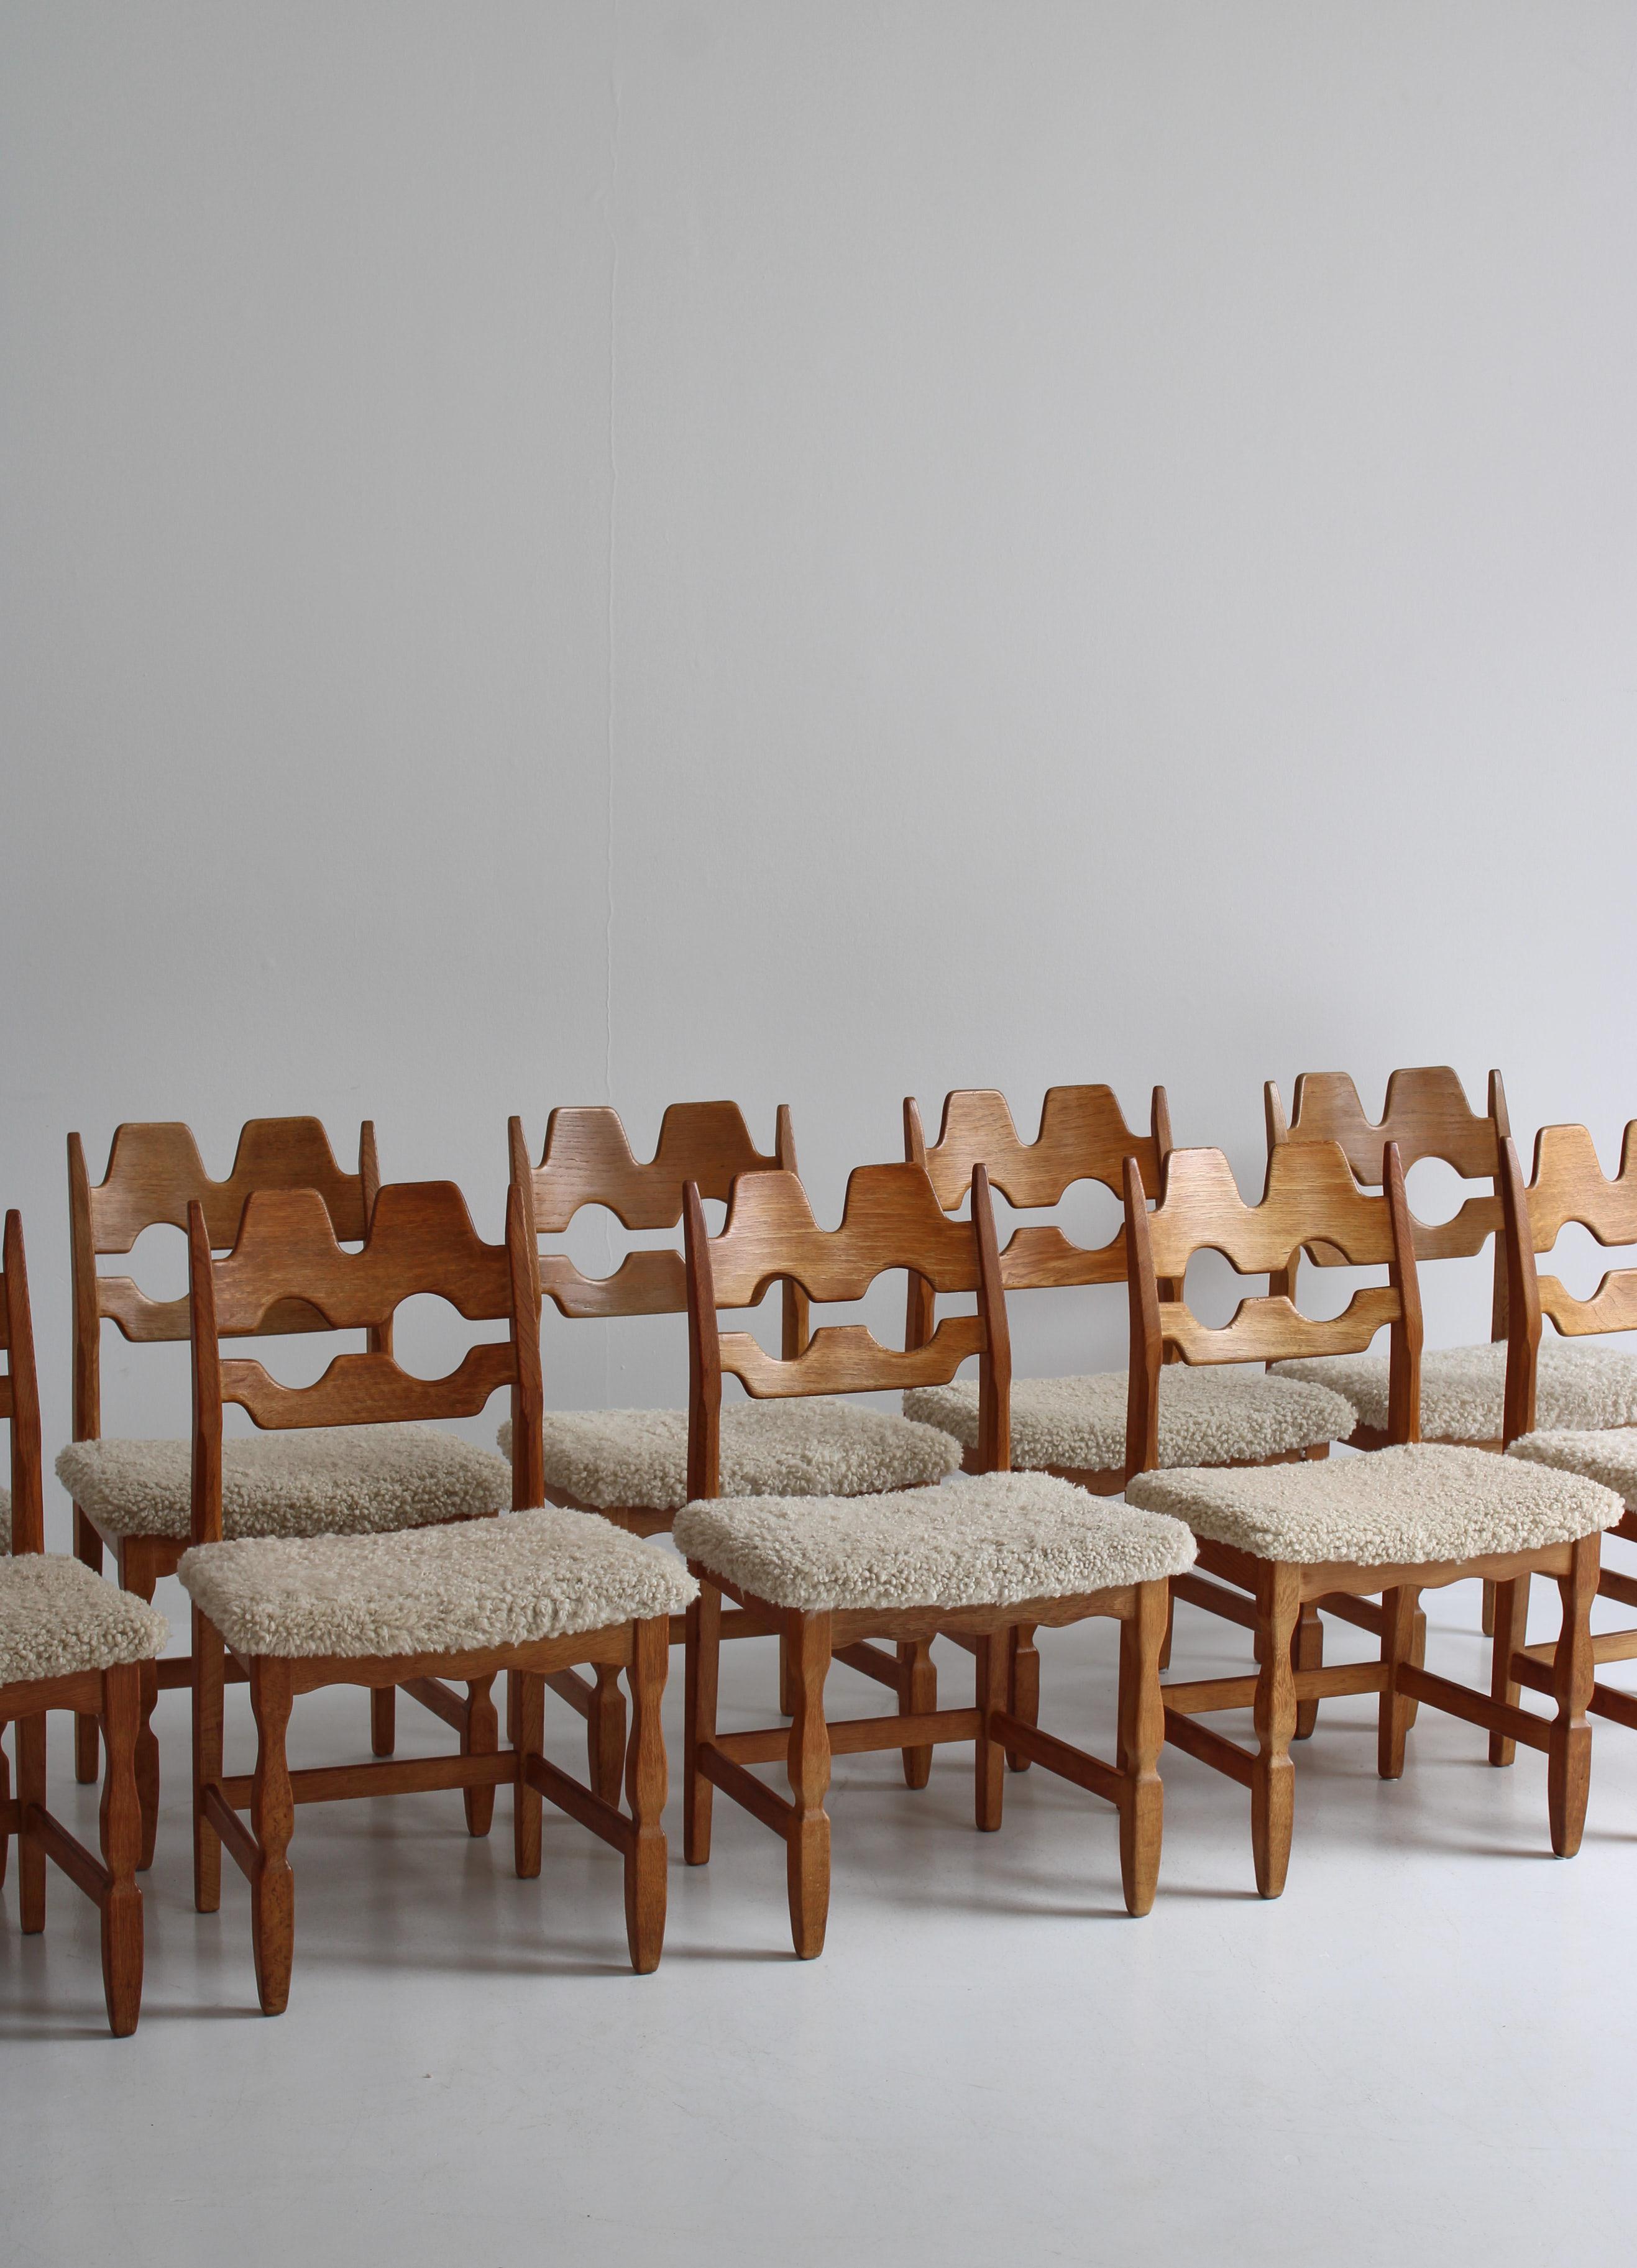 razorblade dining chairs